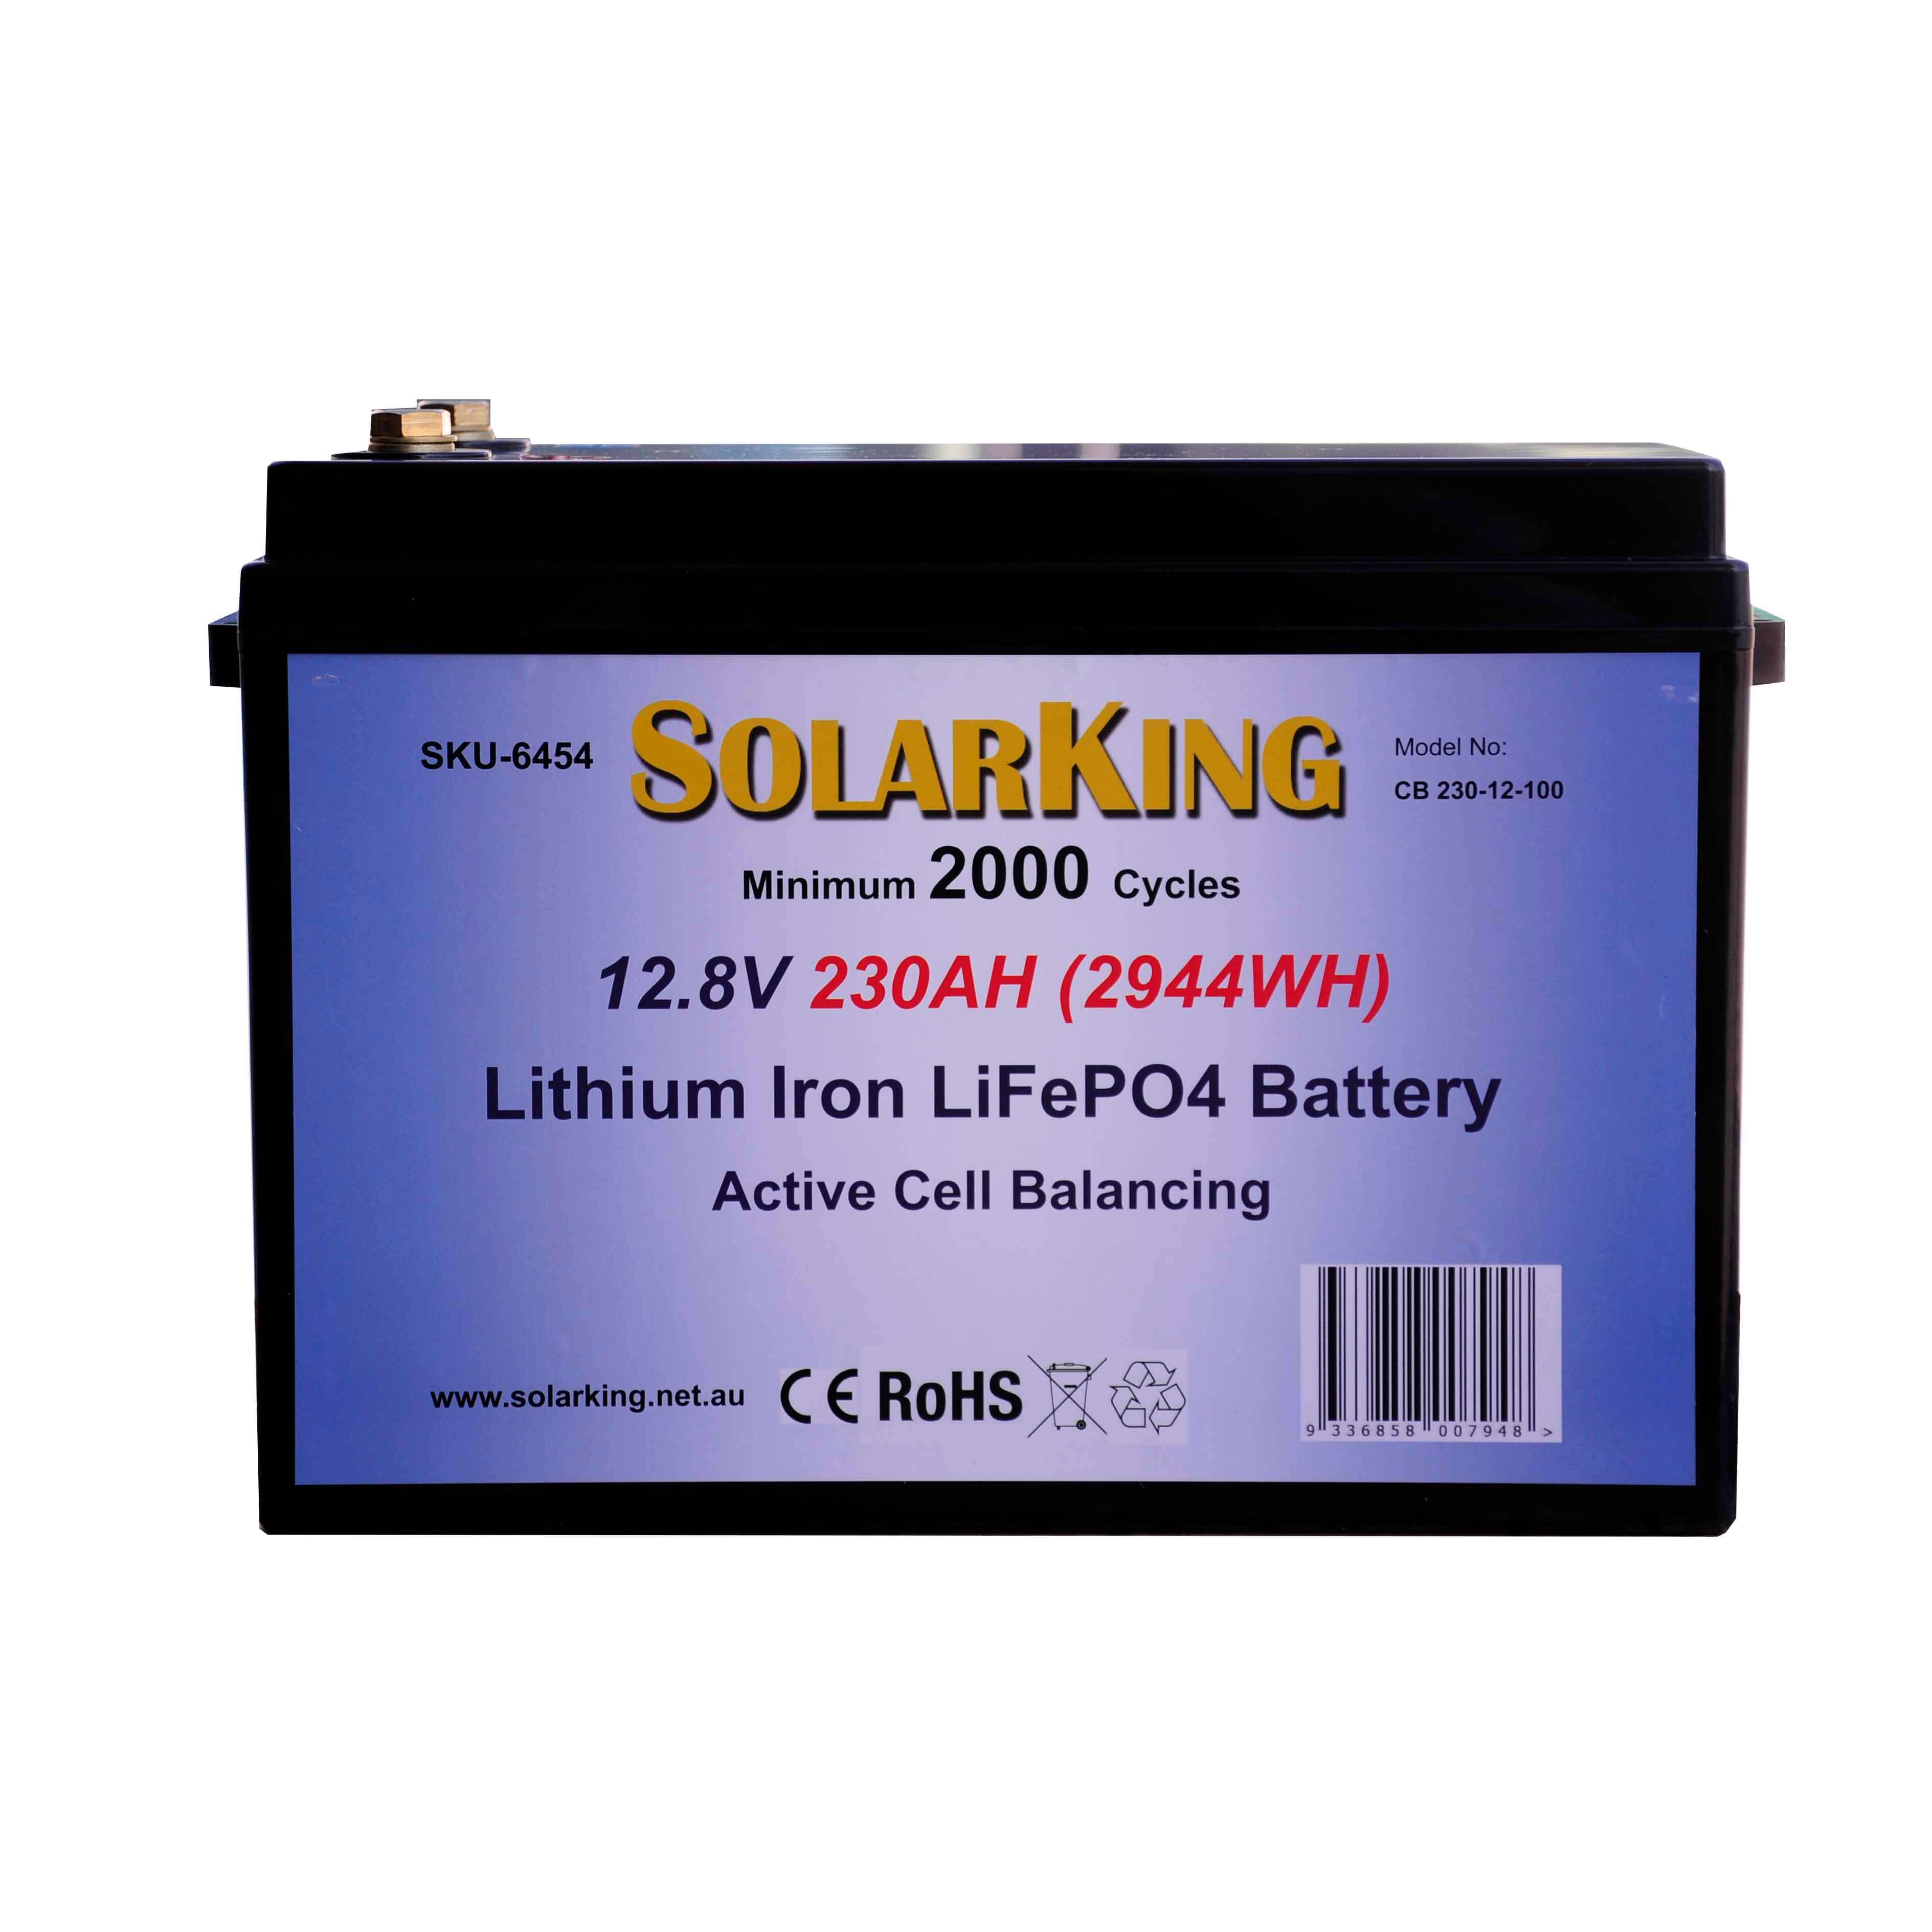 12.8V 230AH Solarking Lithium Iron Battery Plastic Case CB-230-12-100